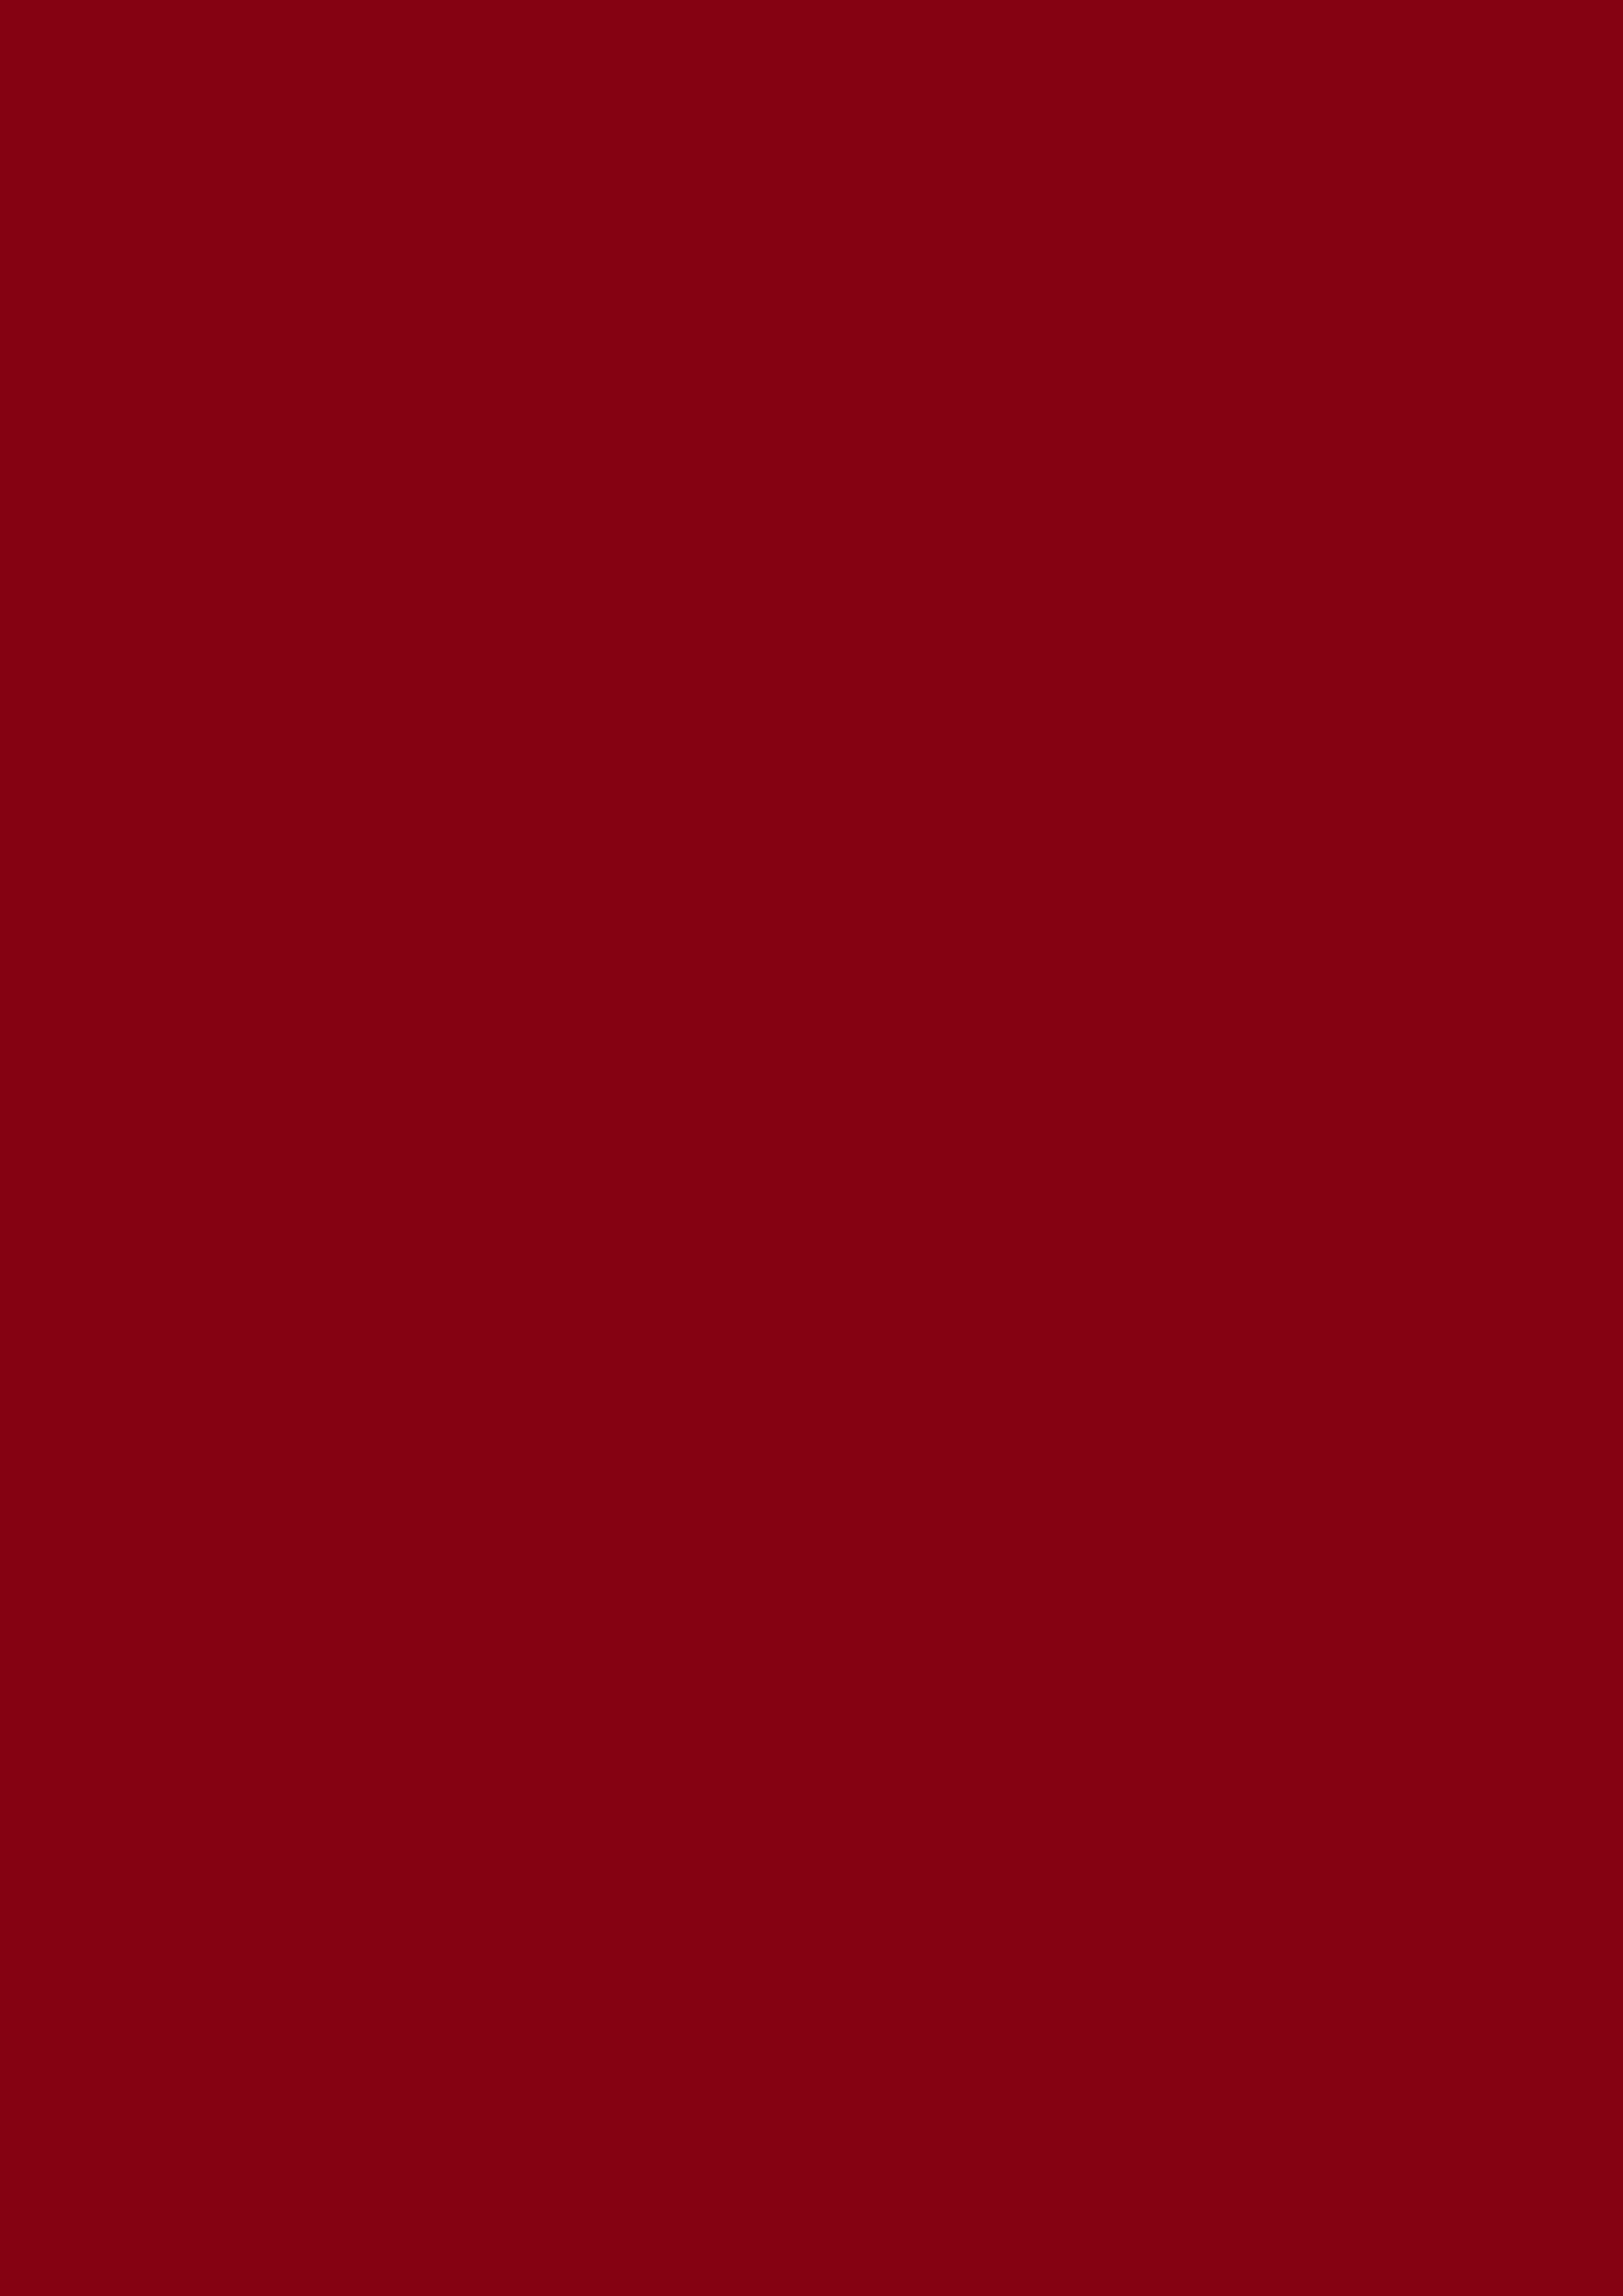 2480x3508 Red Devil Solid Color Background